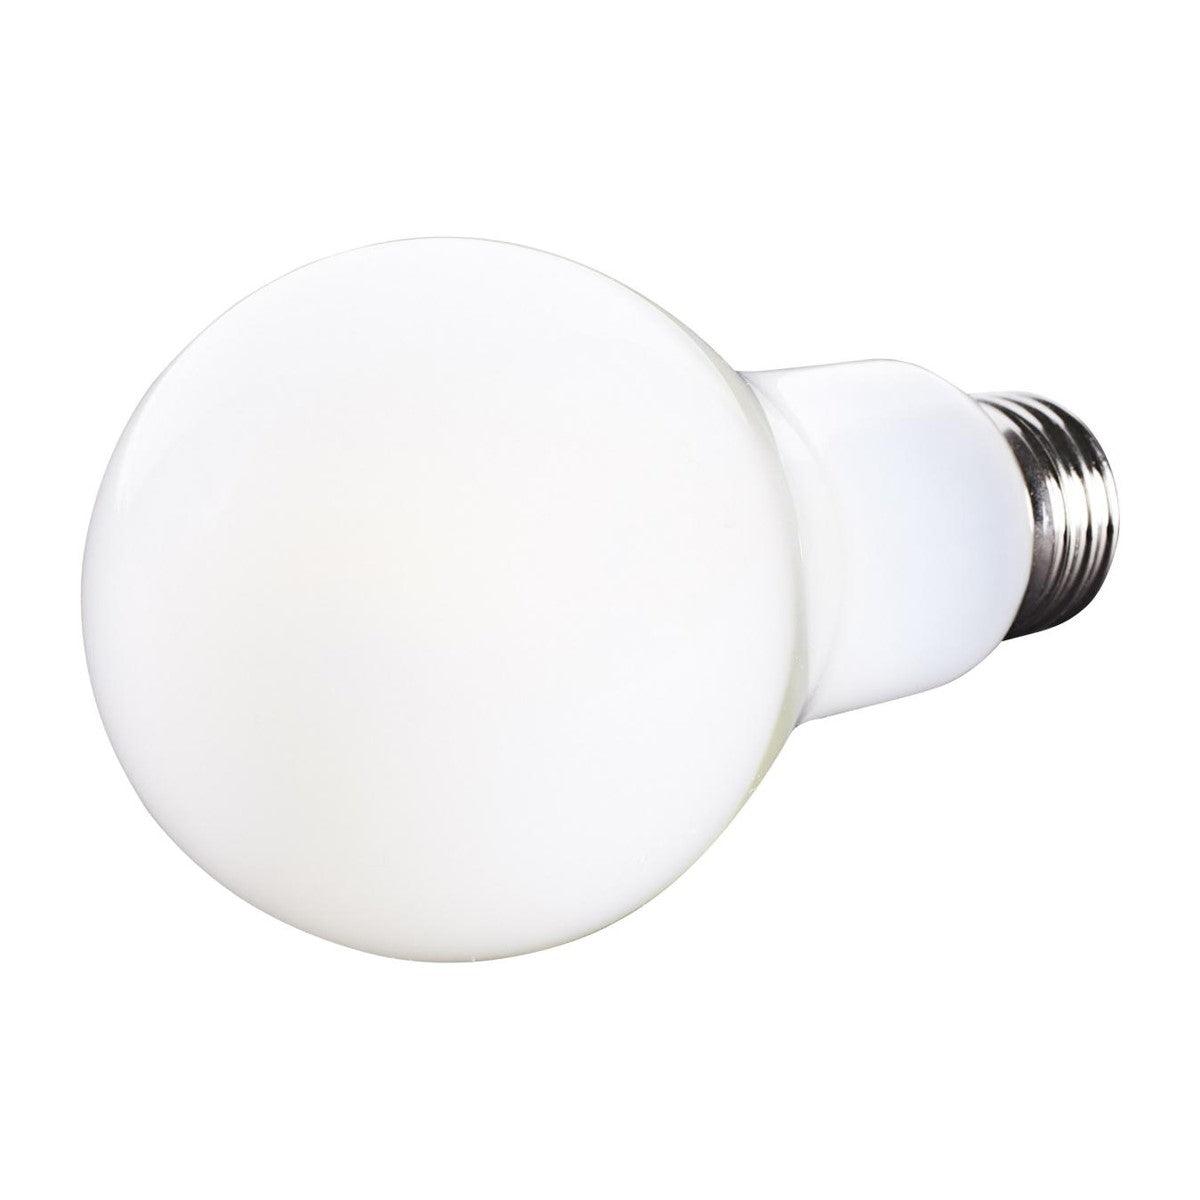 A21 LED Bulb, 17 Watt, 2000 Lumens, 3000K, E26 Medium Base, Frosted Finish